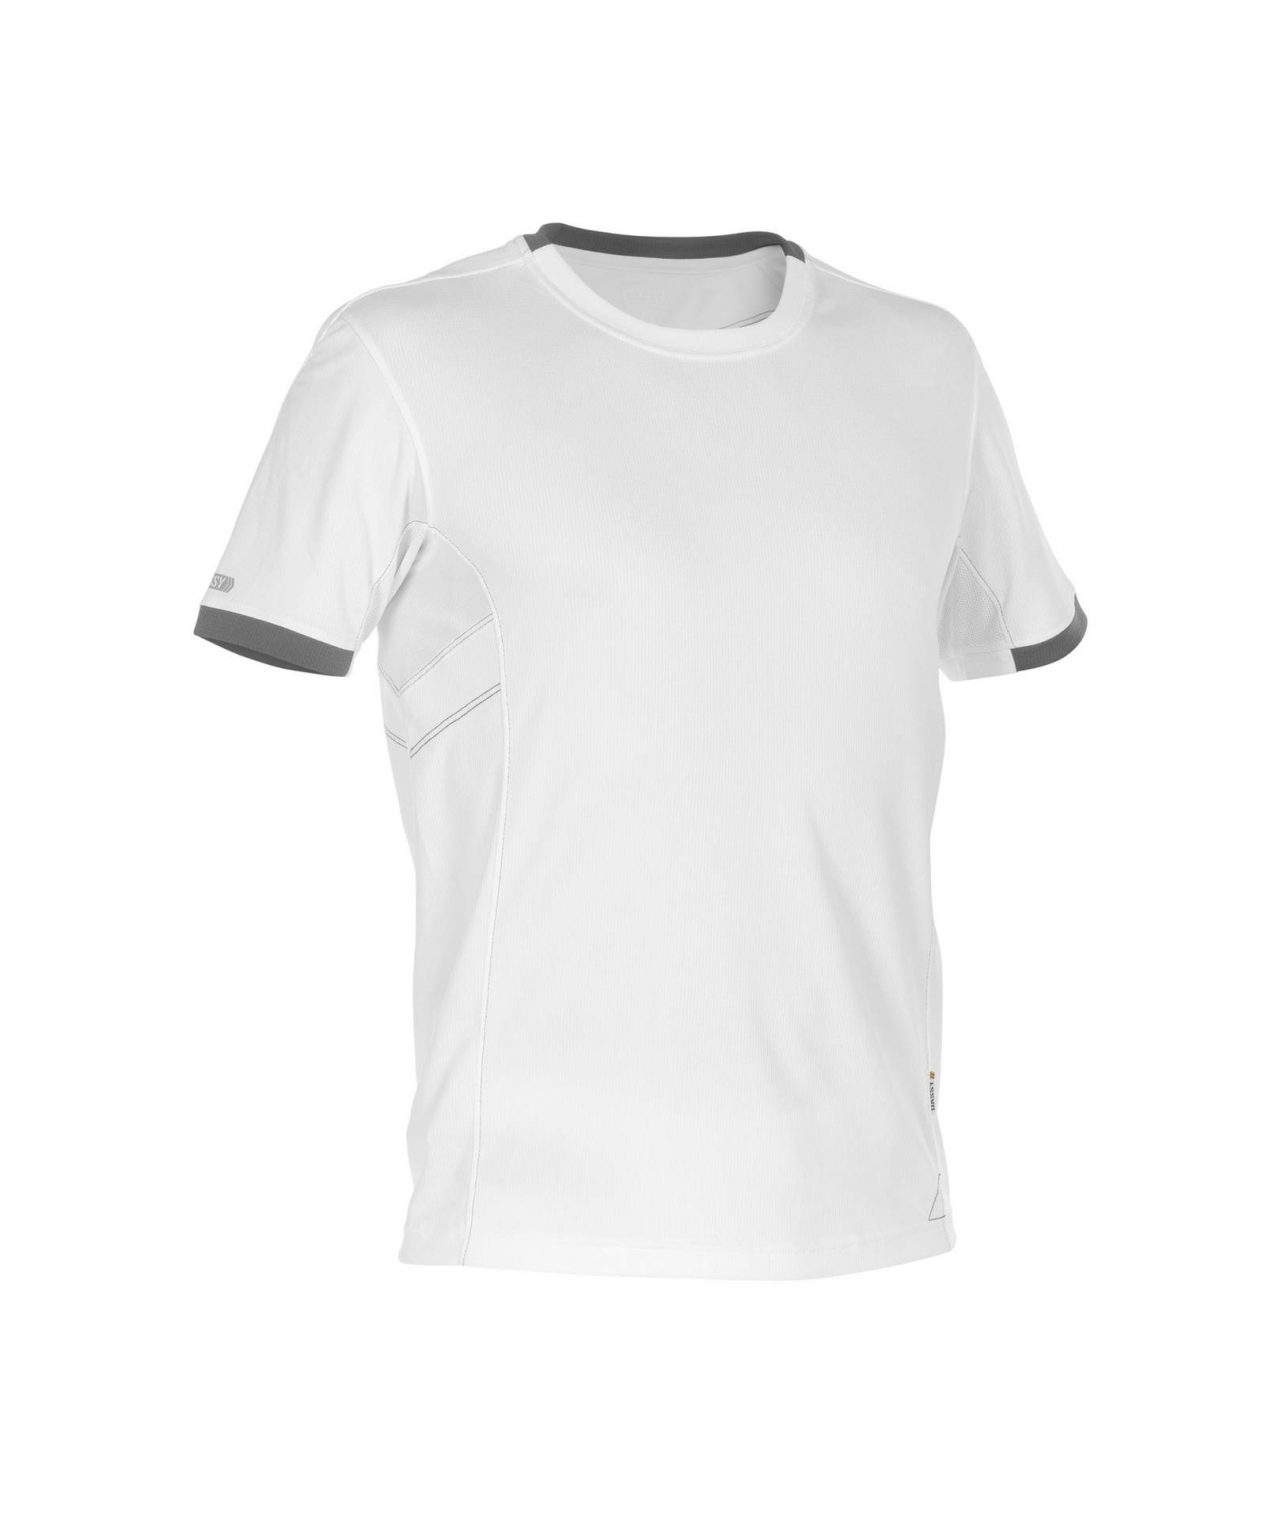 nexus t shirt white anthracite grey front